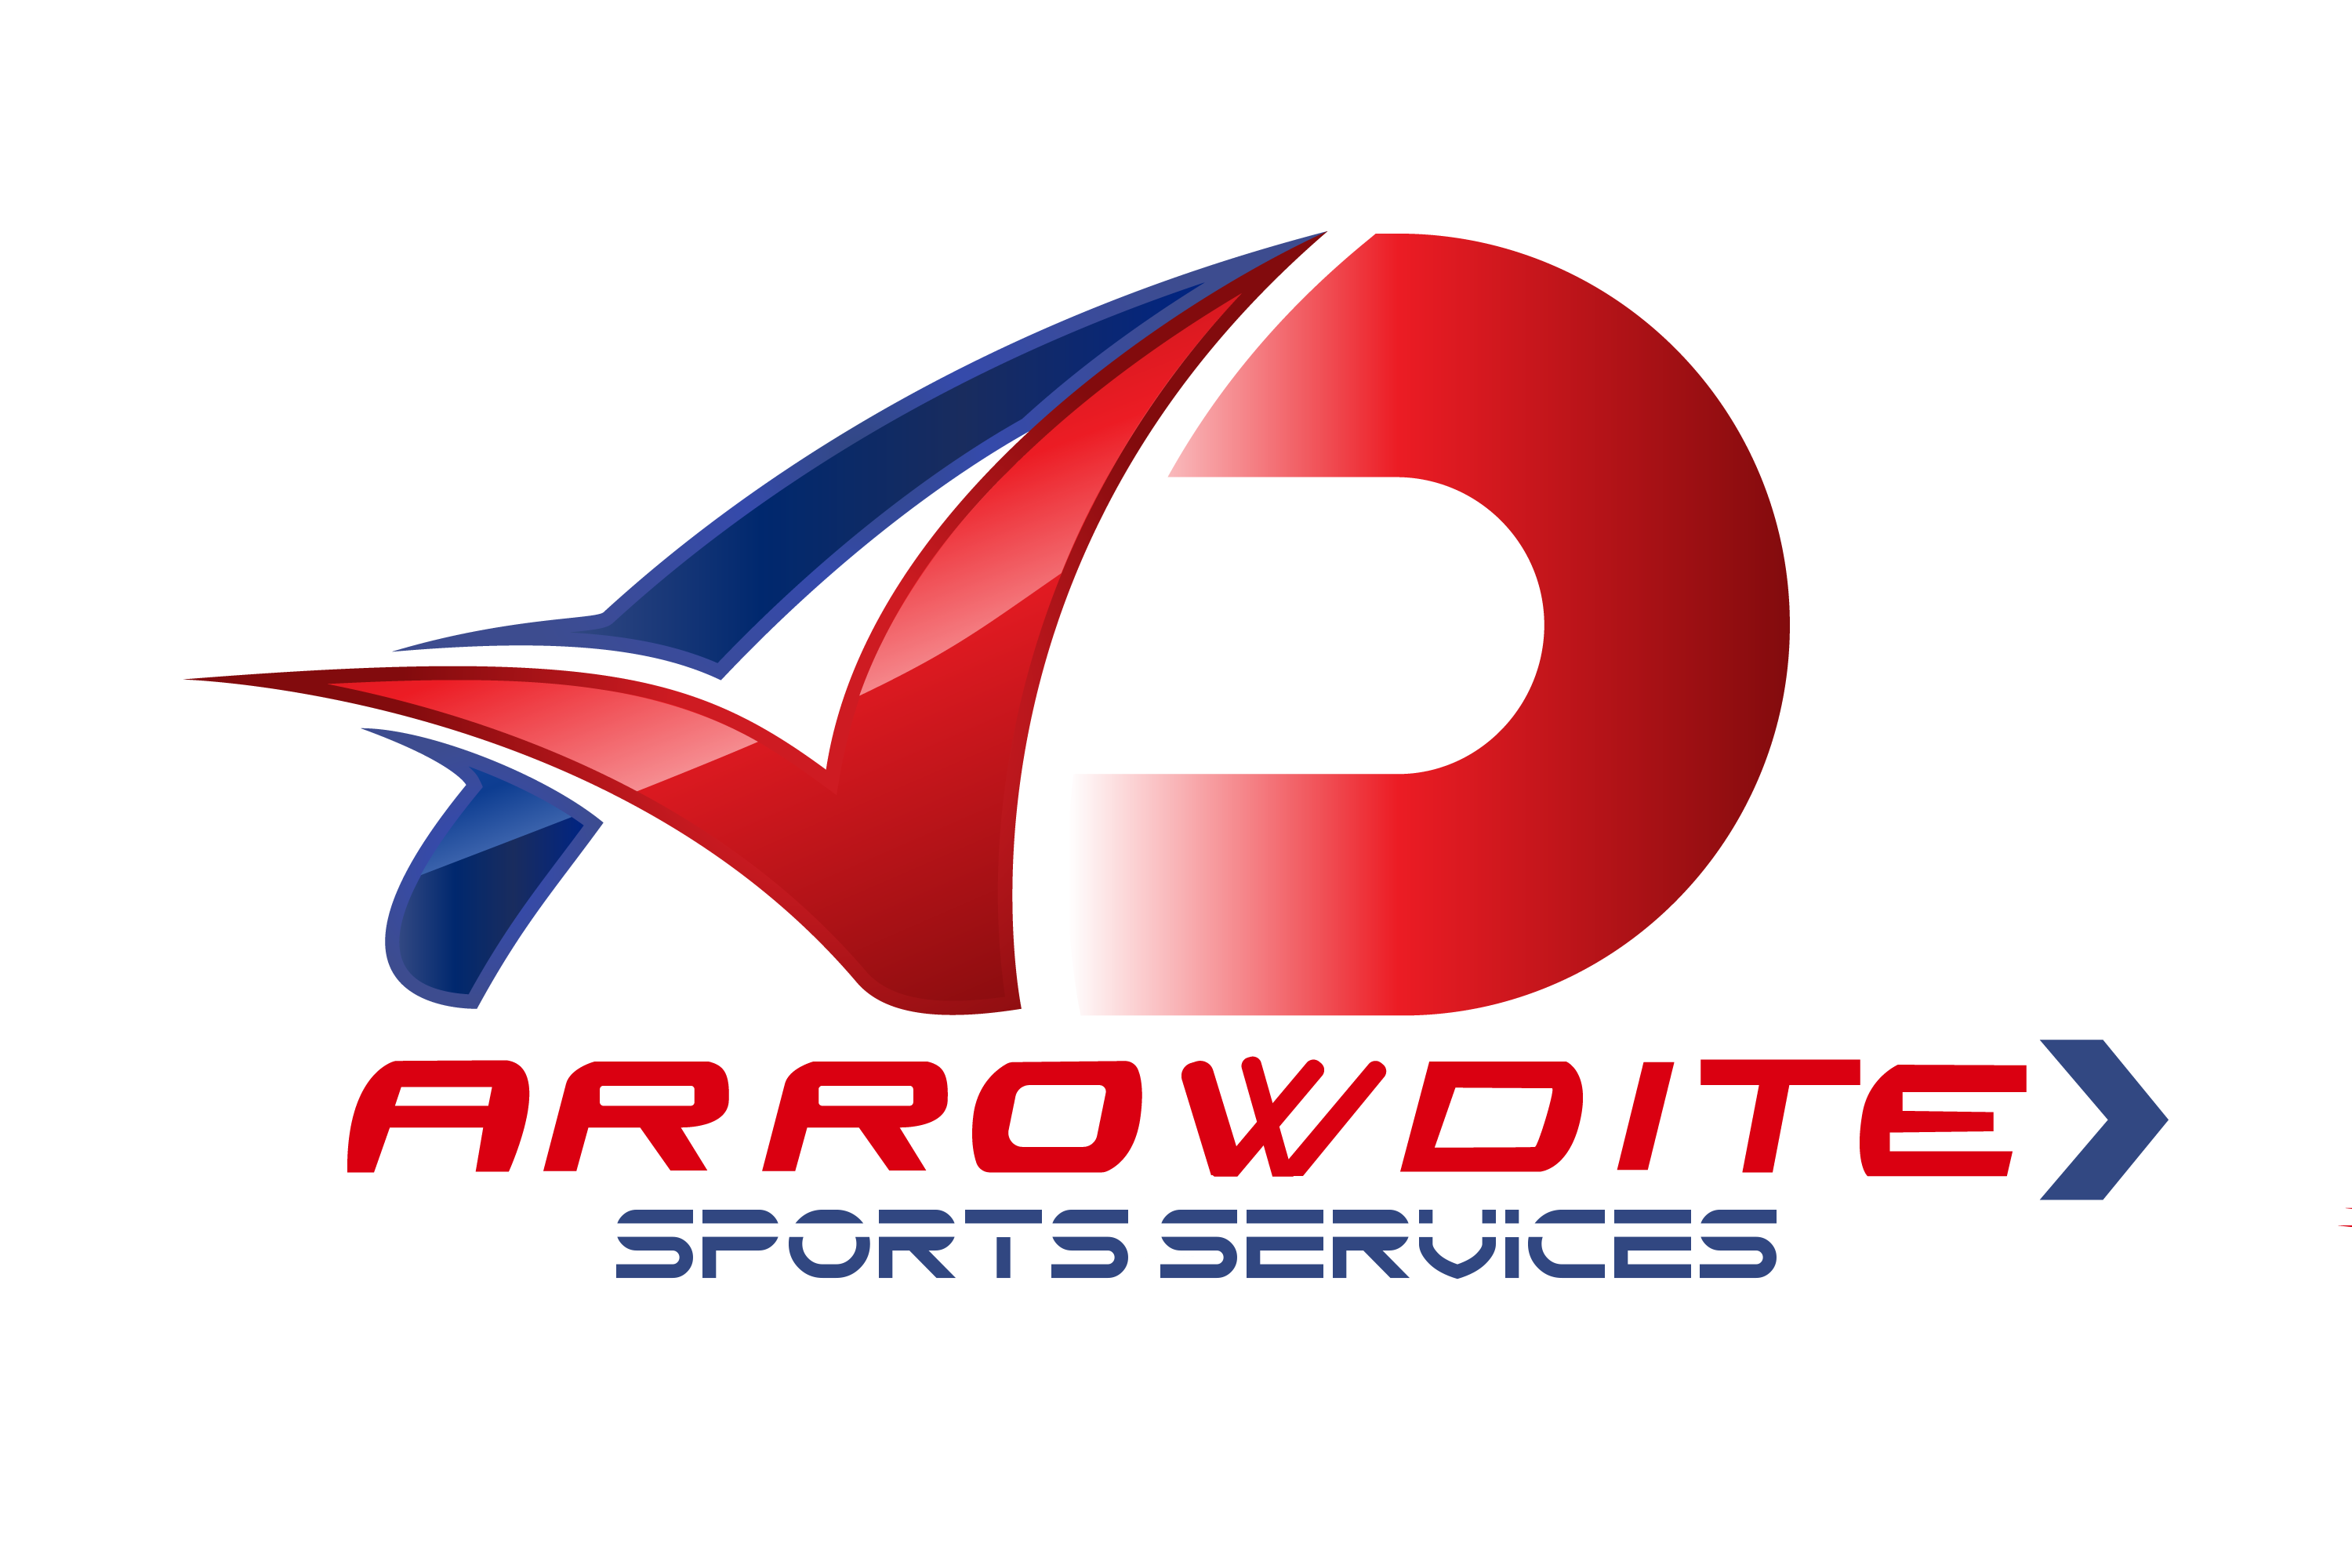 ArrowditeSportsServices